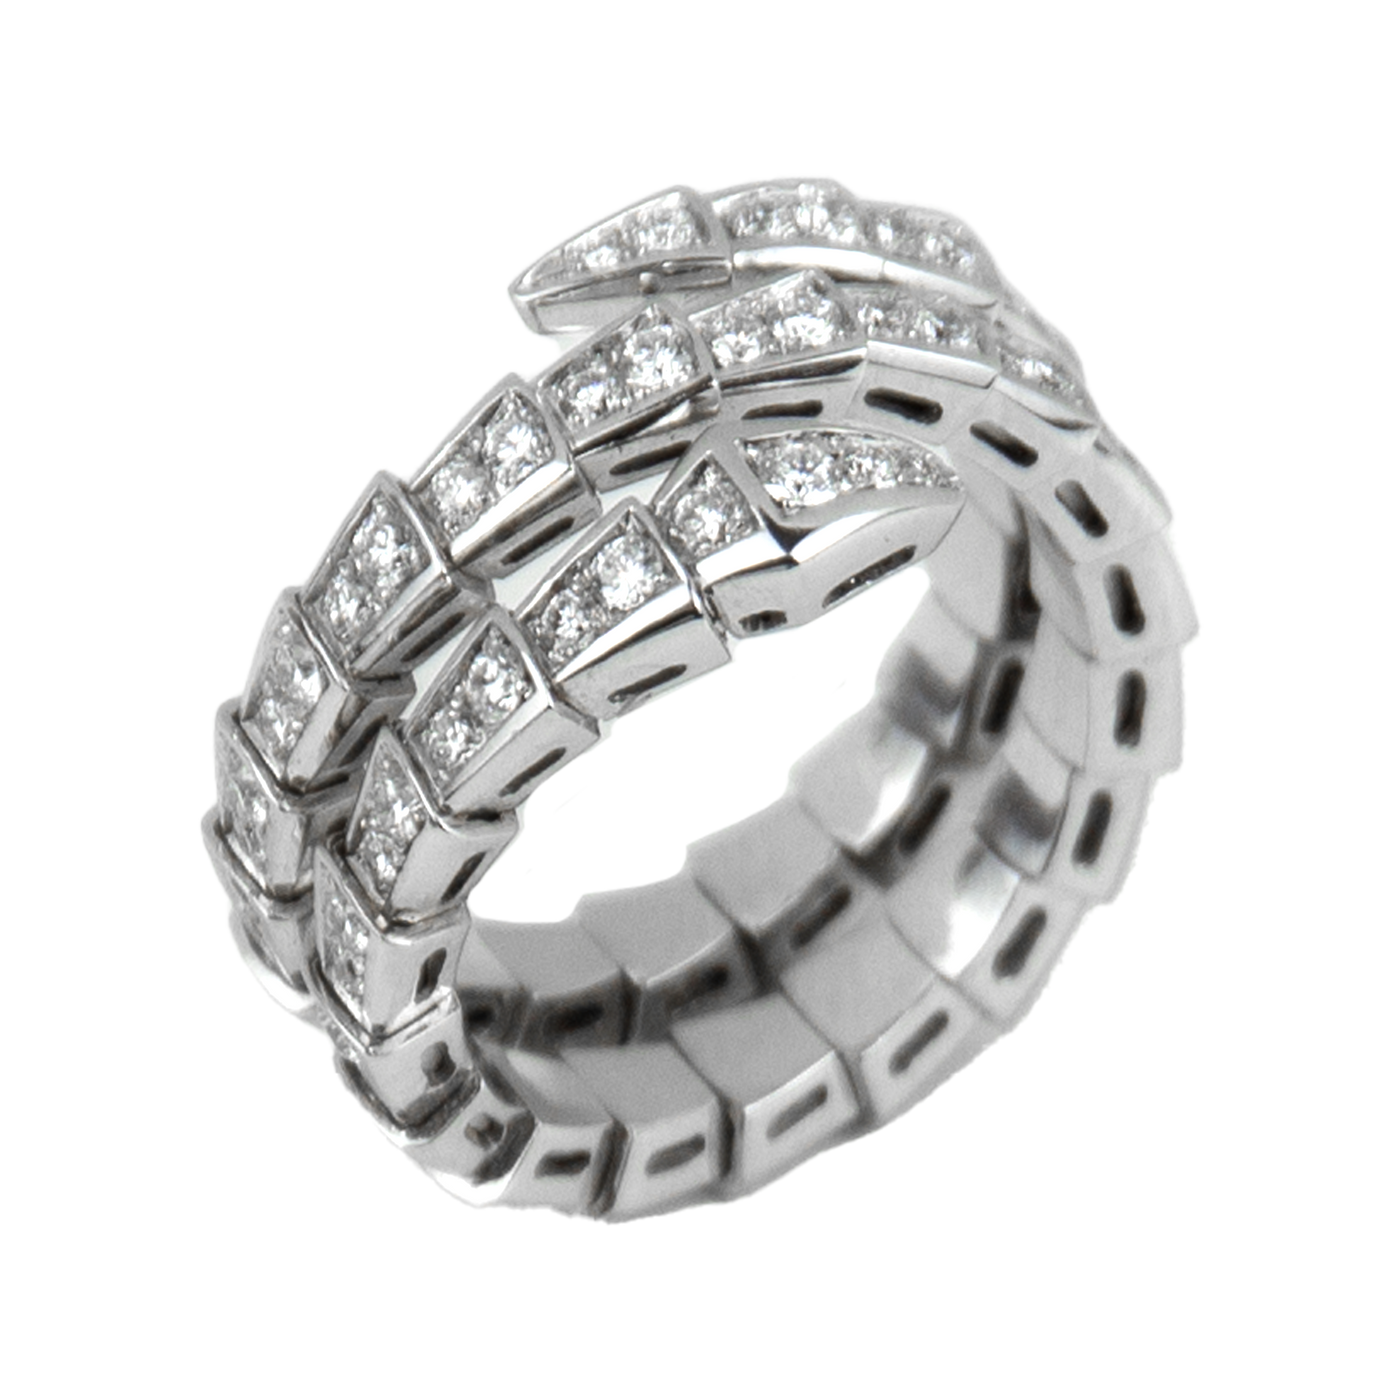 Bulgari Serpenti Viper two-coil 18 kt white gold ring with pavé diamonds